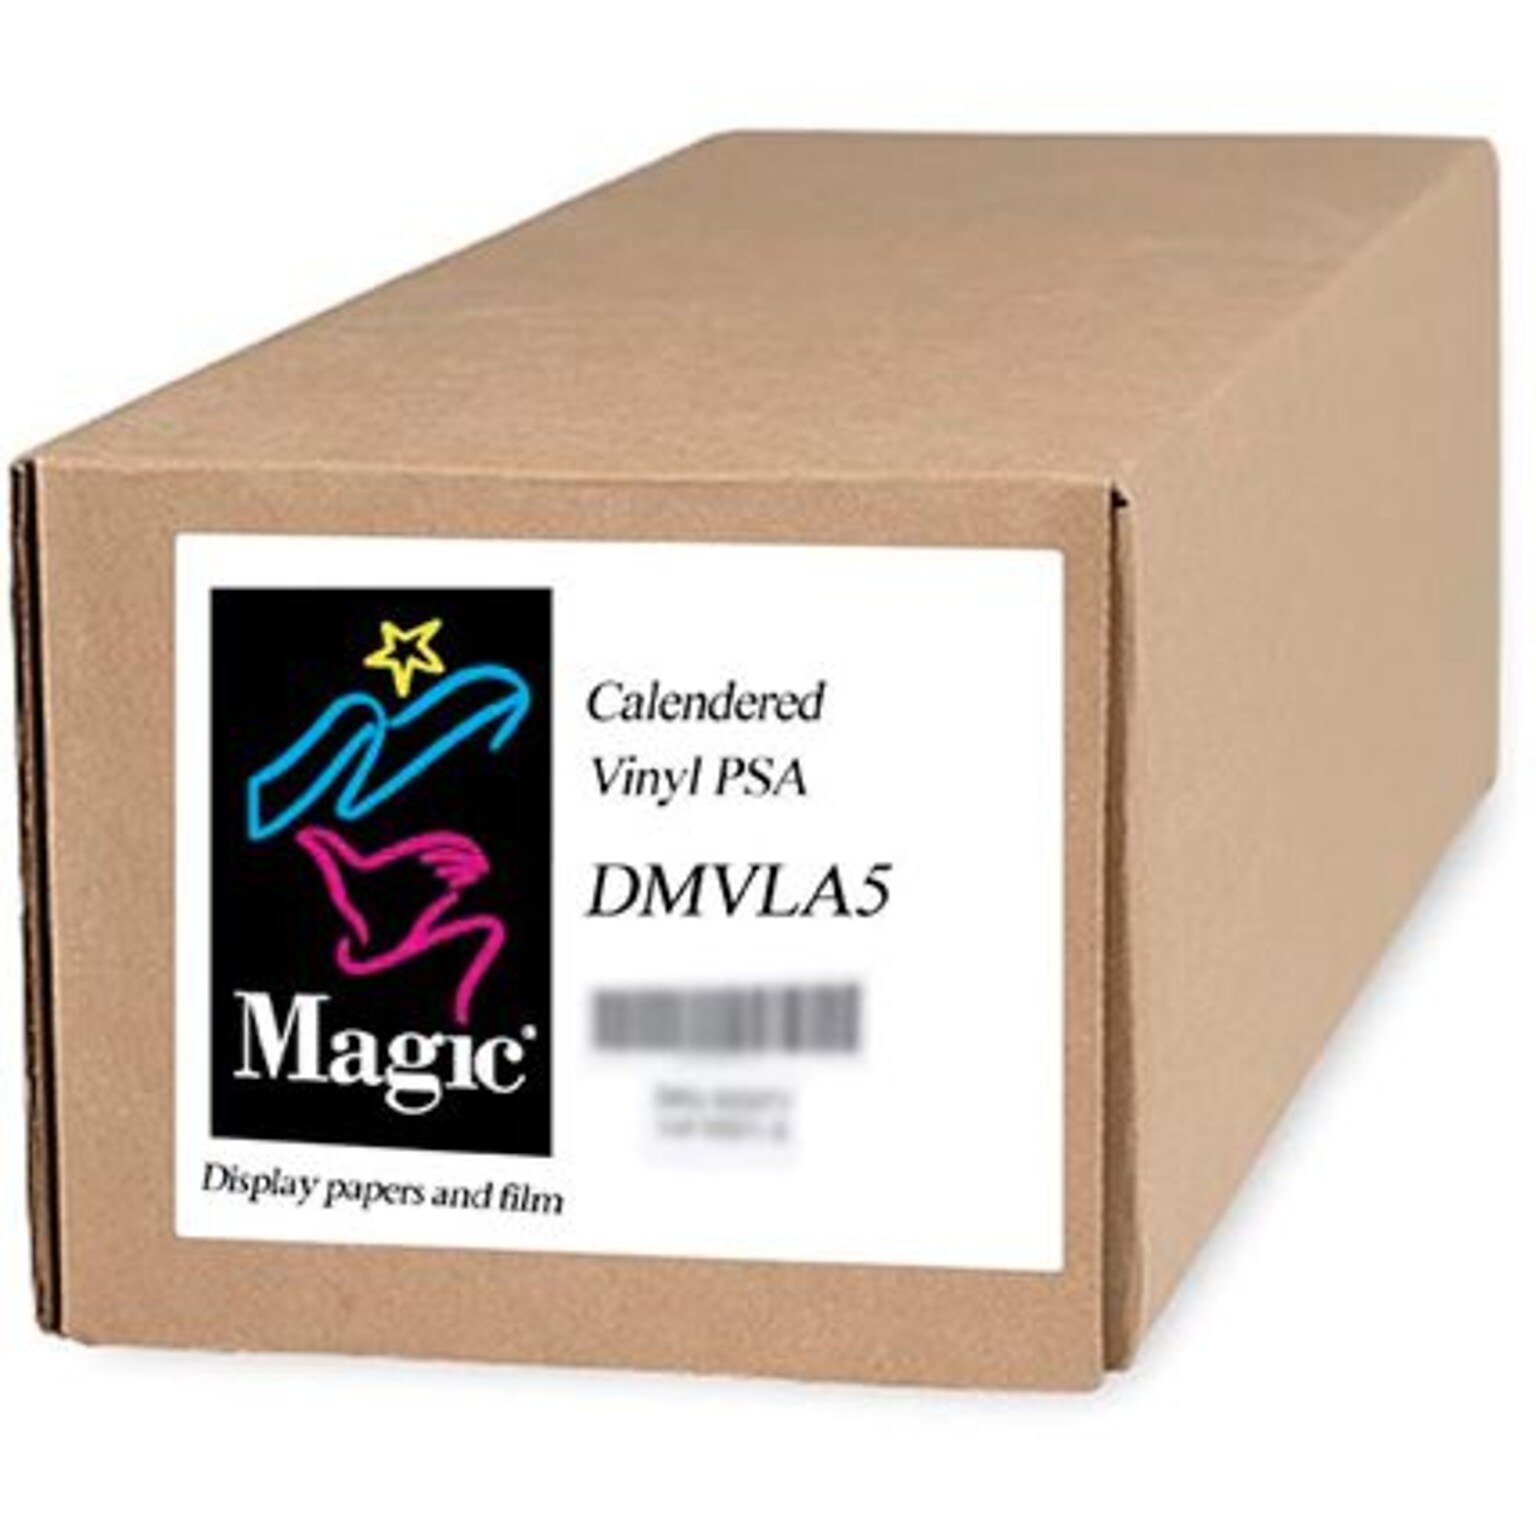 Magiclee/Magic Wide Format Bond Paper Roll, 36 x 40, Matte Finish (67692)